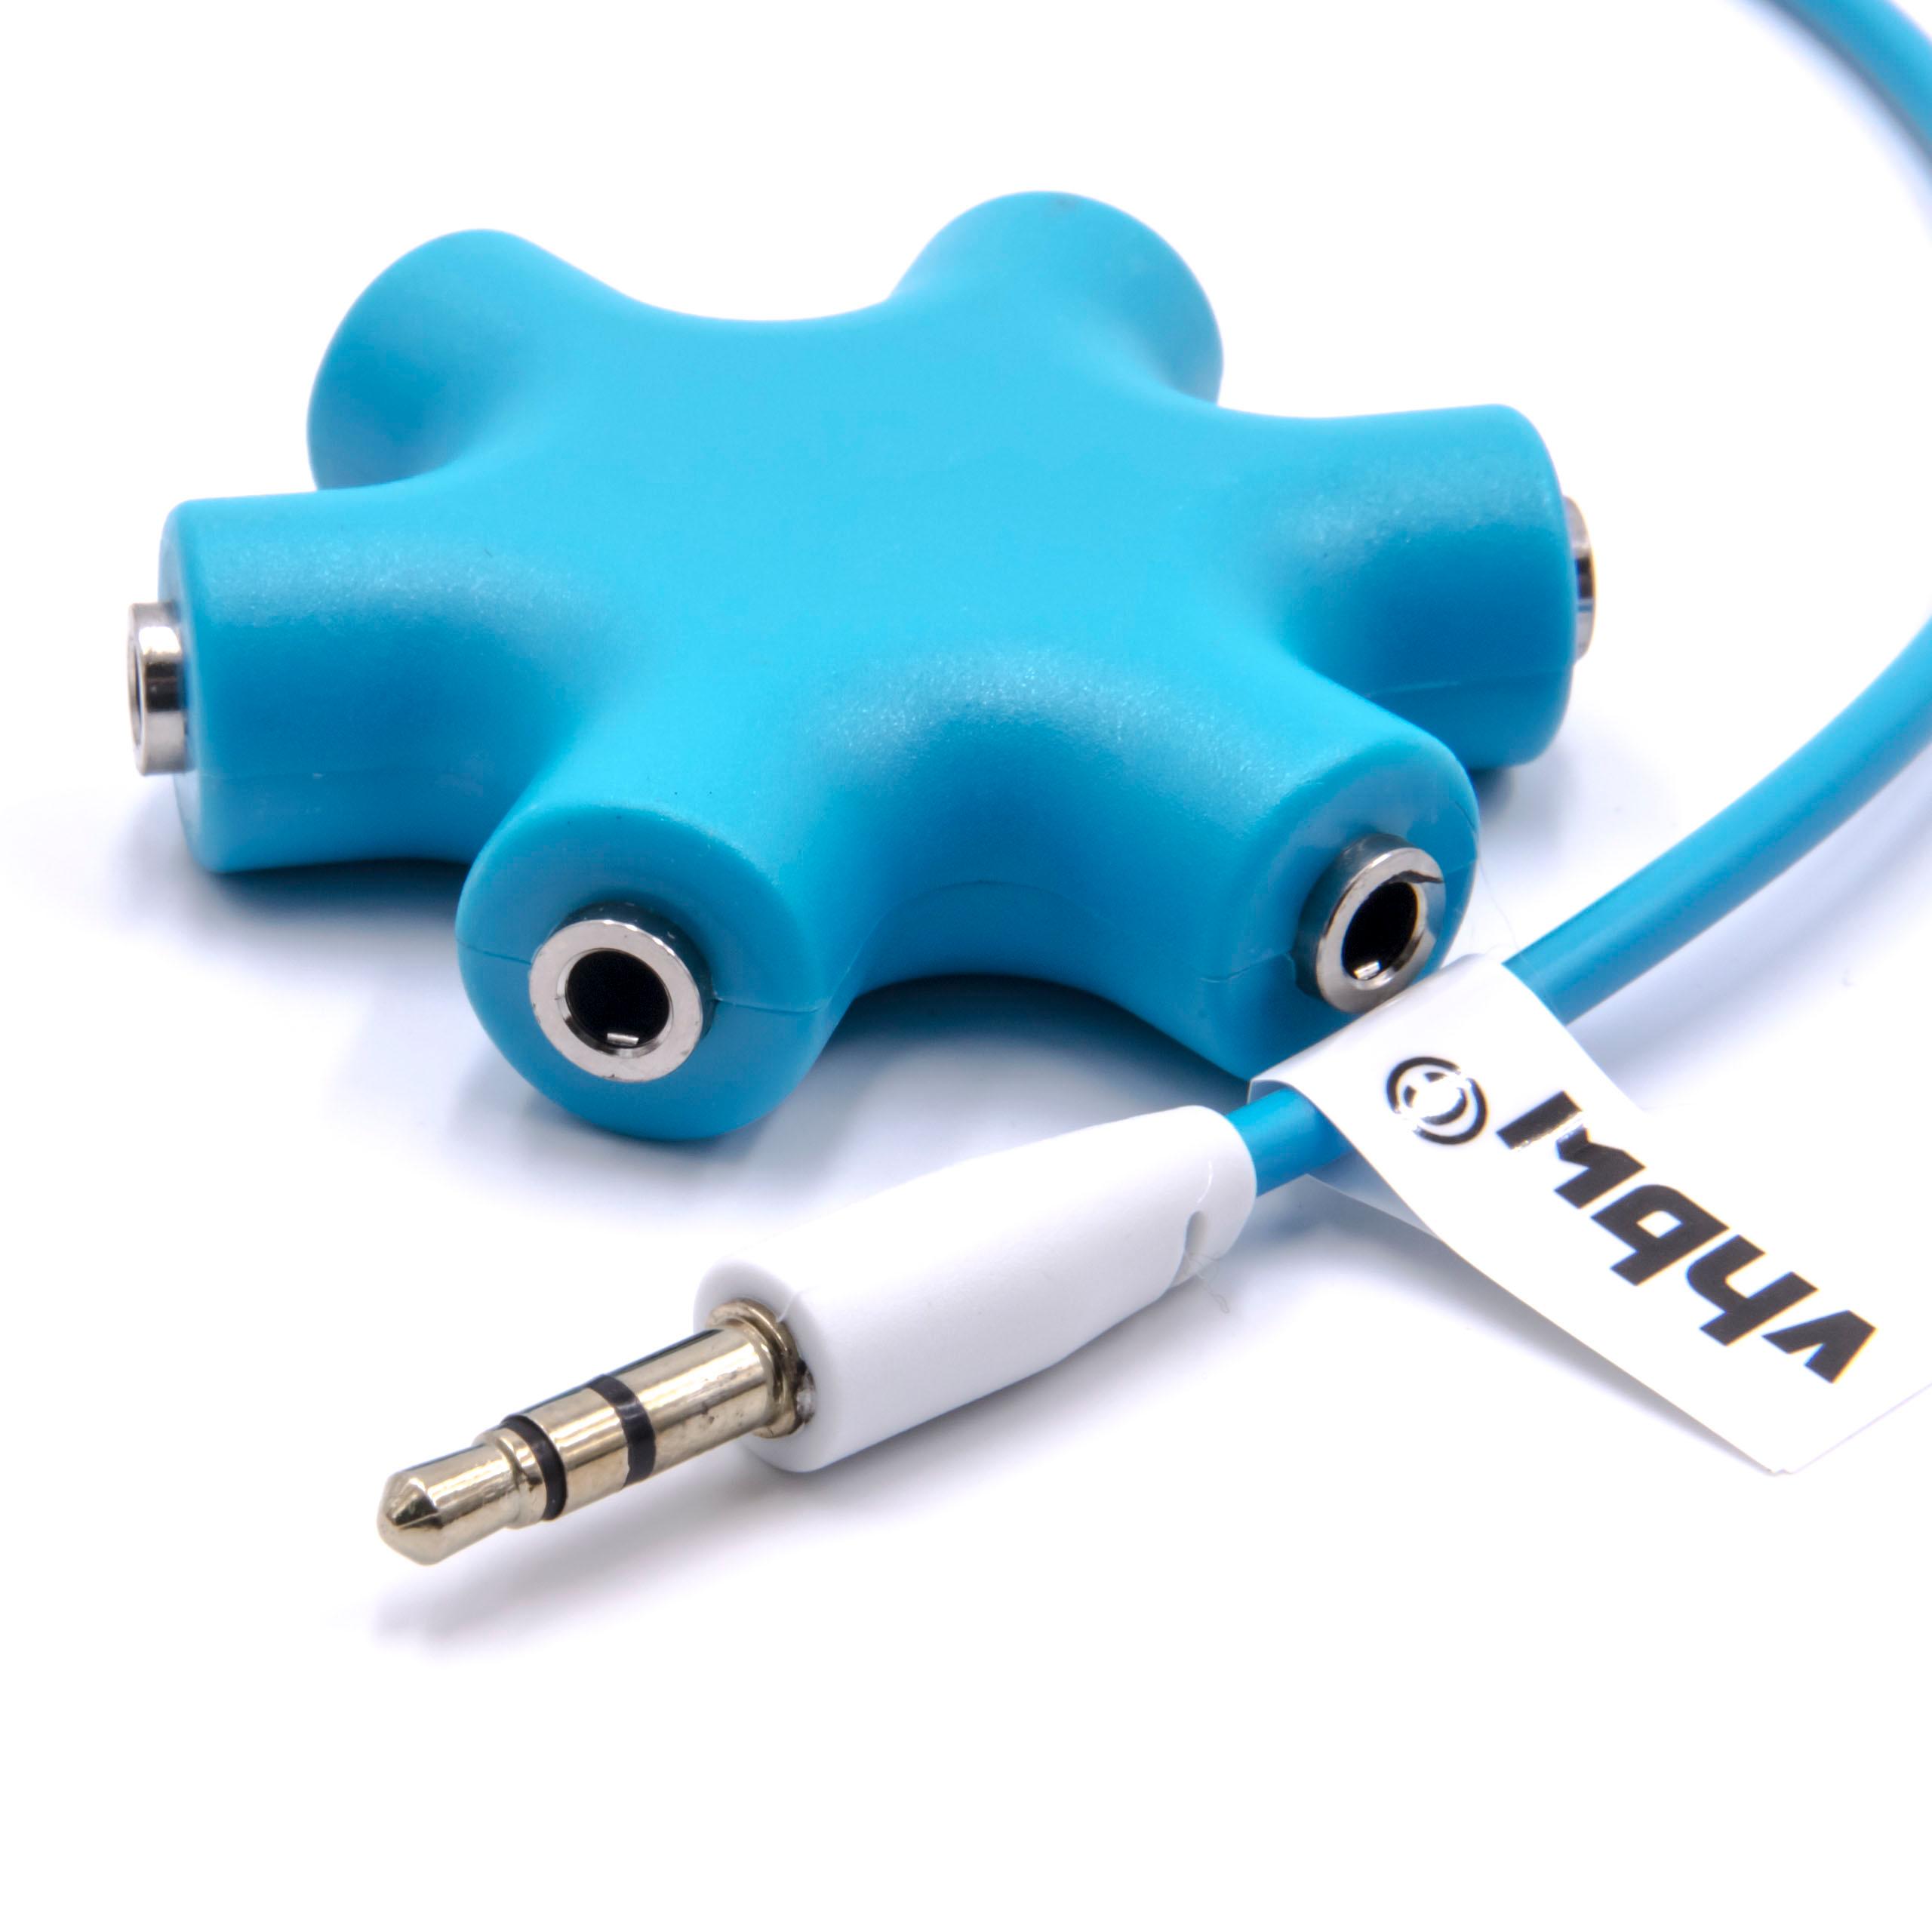 vhbw Splitter audio, divisor, duplicador jack 5 vías AUX azul para auriculares, altavoces, tablets